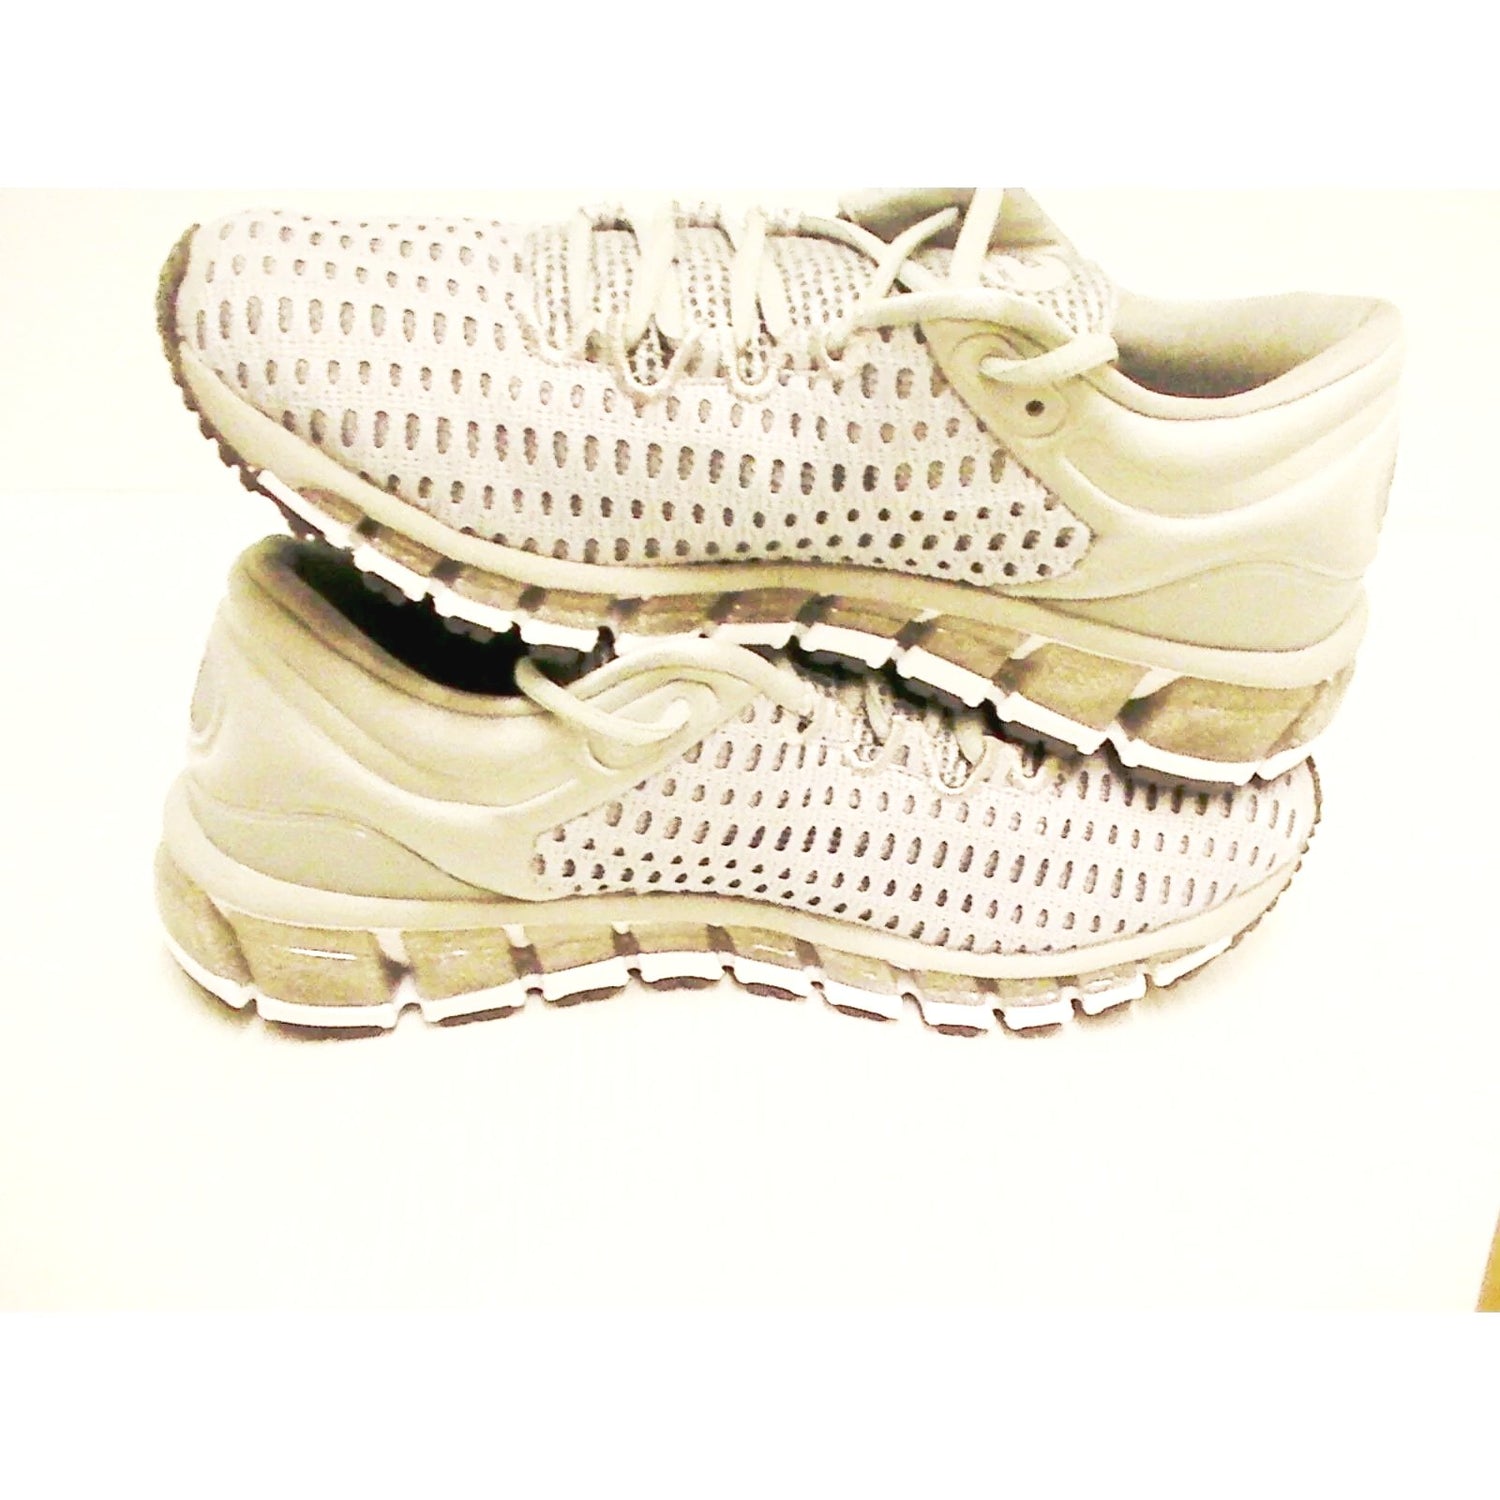 Asics women's gel quantum 360 shift mid grey running shoes size 7.5 us